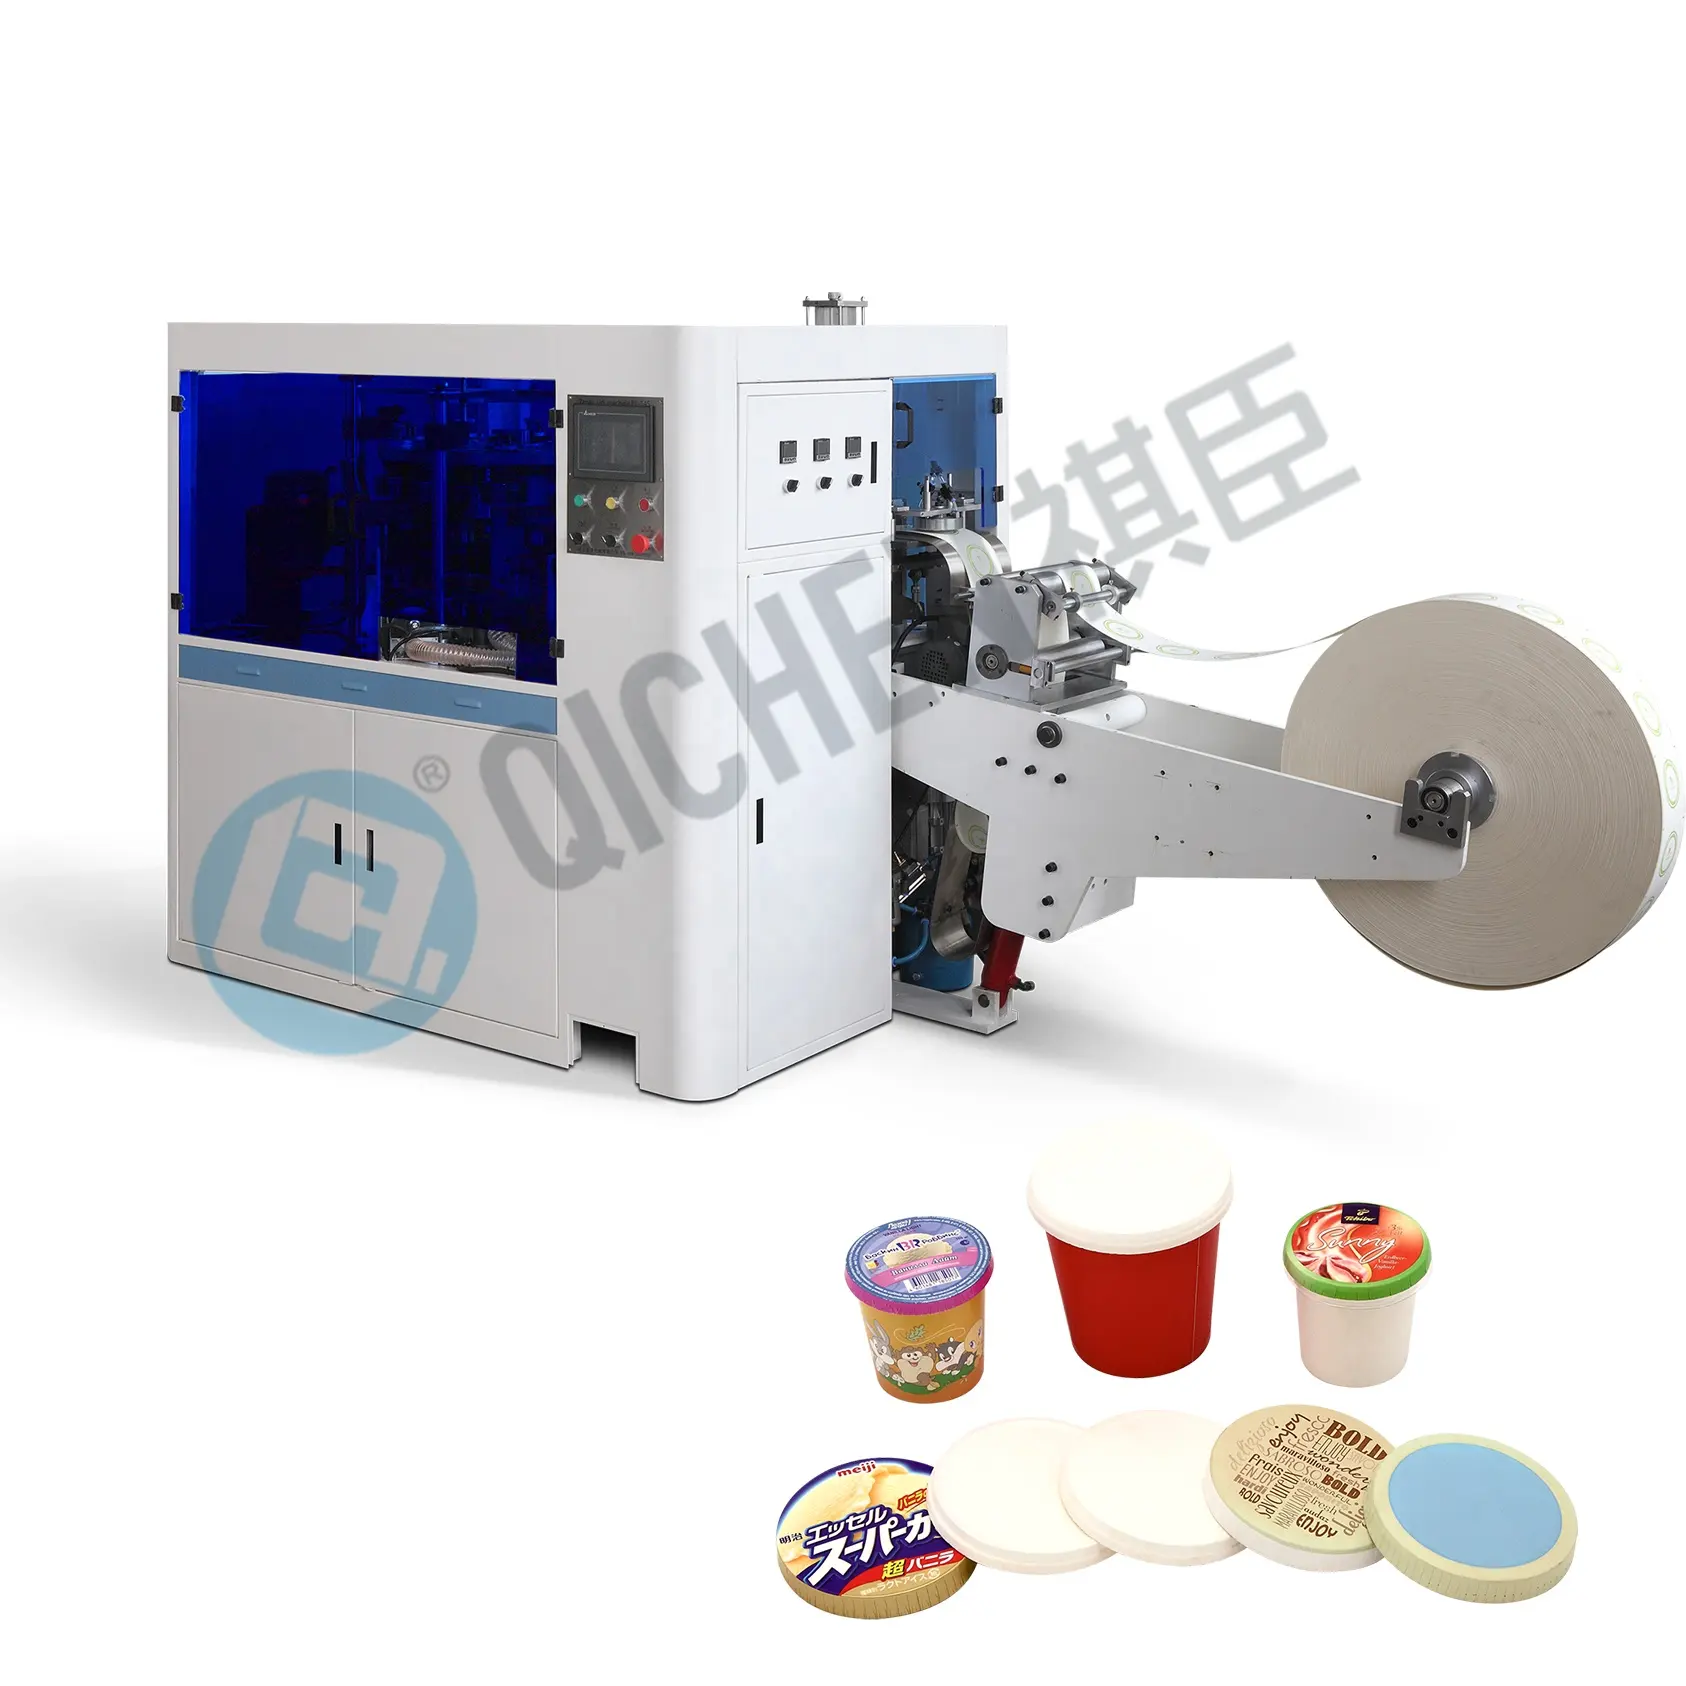 QICHEN produzione automatica di coperchi per tazze di carta da caffè di buona qualità per idee per piccole imprese PL-145